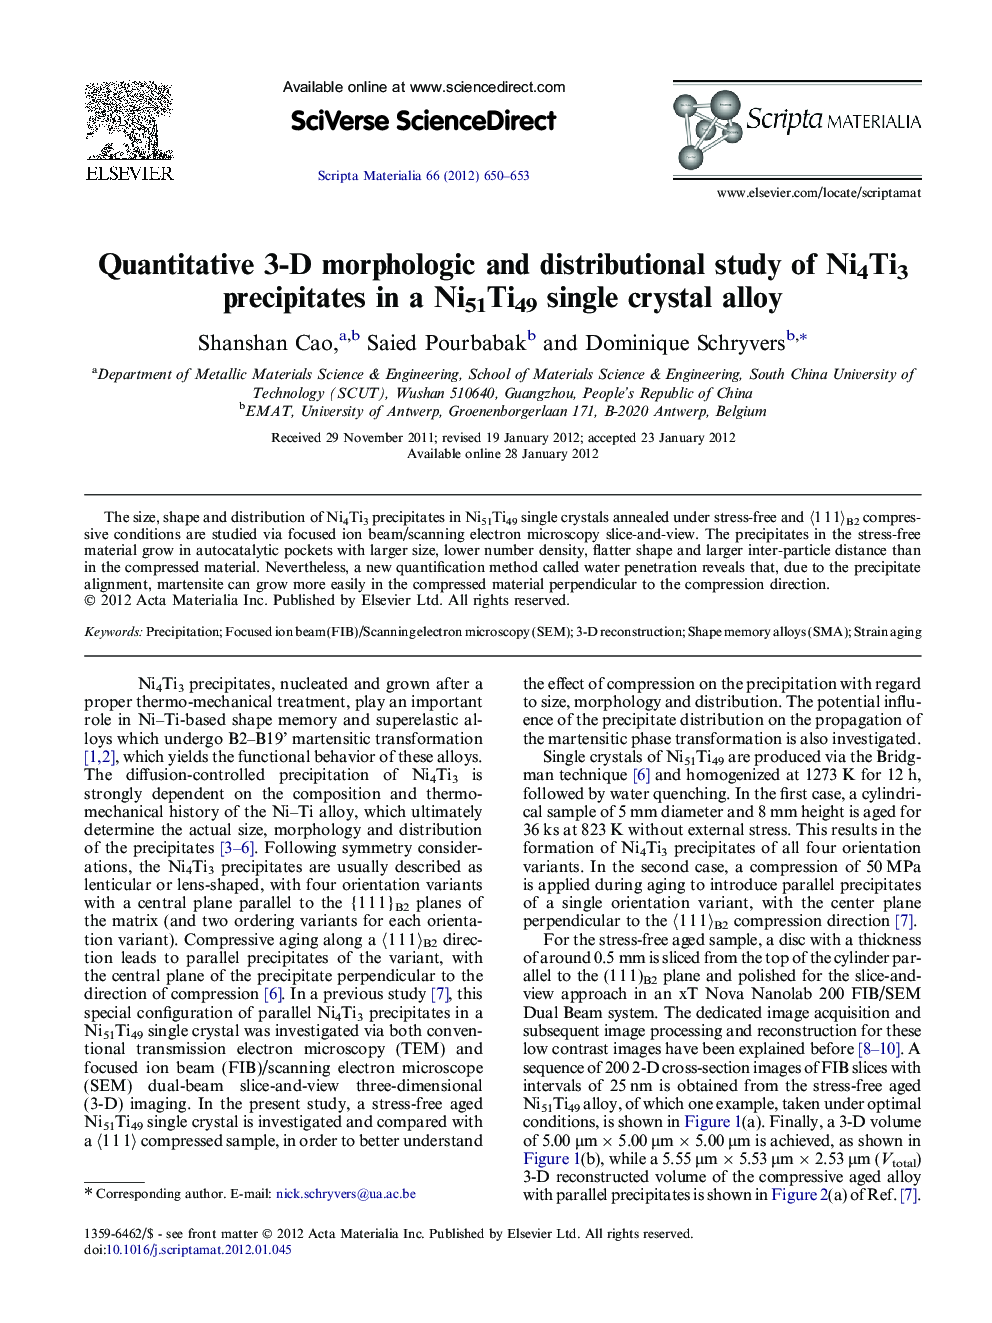 Quantitative 3-D morphologic and distributional study of Ni4Ti3 precipitates in a Ni51Ti49 single crystal alloy